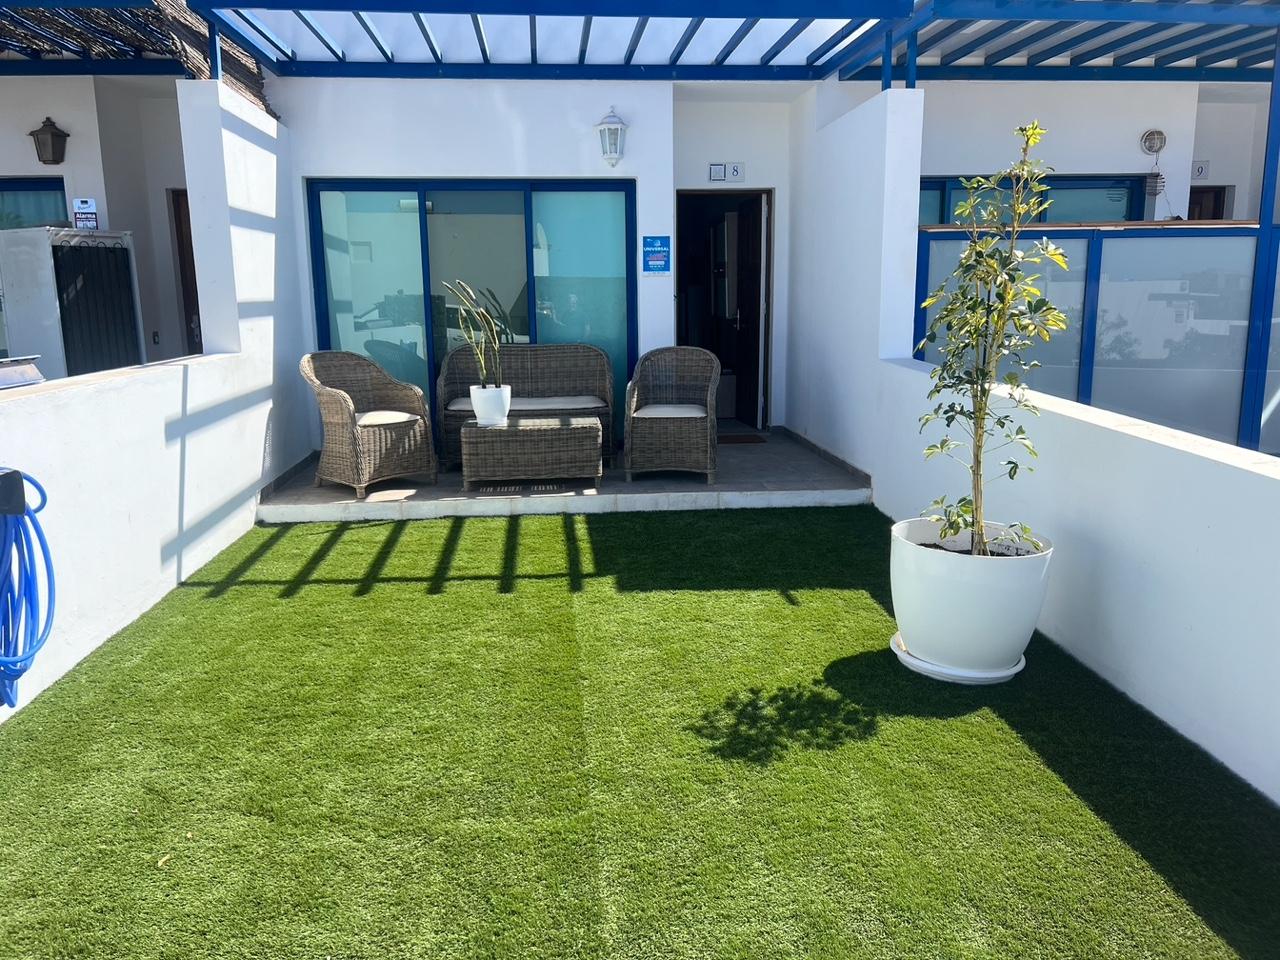 Newly Refurbished 2 Bedroom Apartment for sale in Lanzarote, Playa Blanca